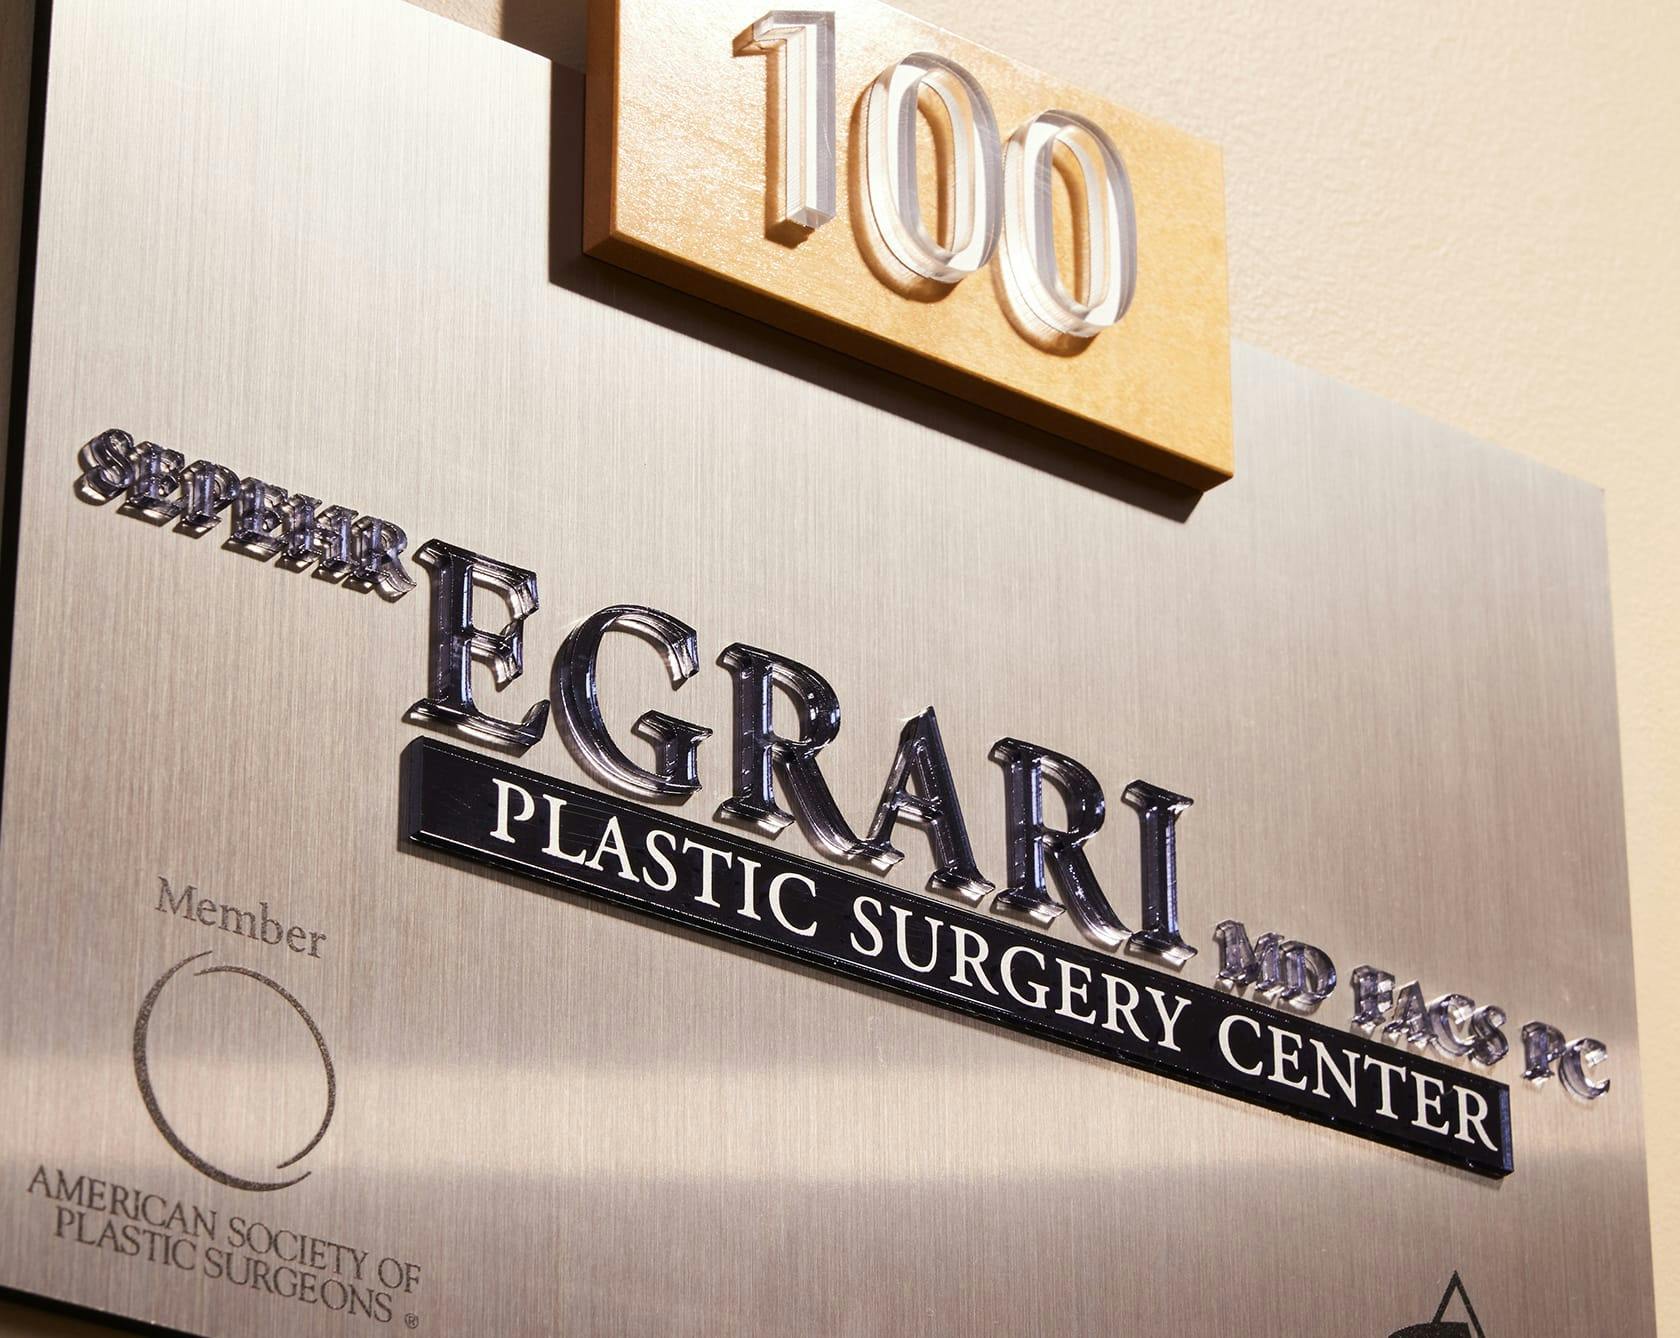 an image of a plaque of Egrari Plastic Surgery Center